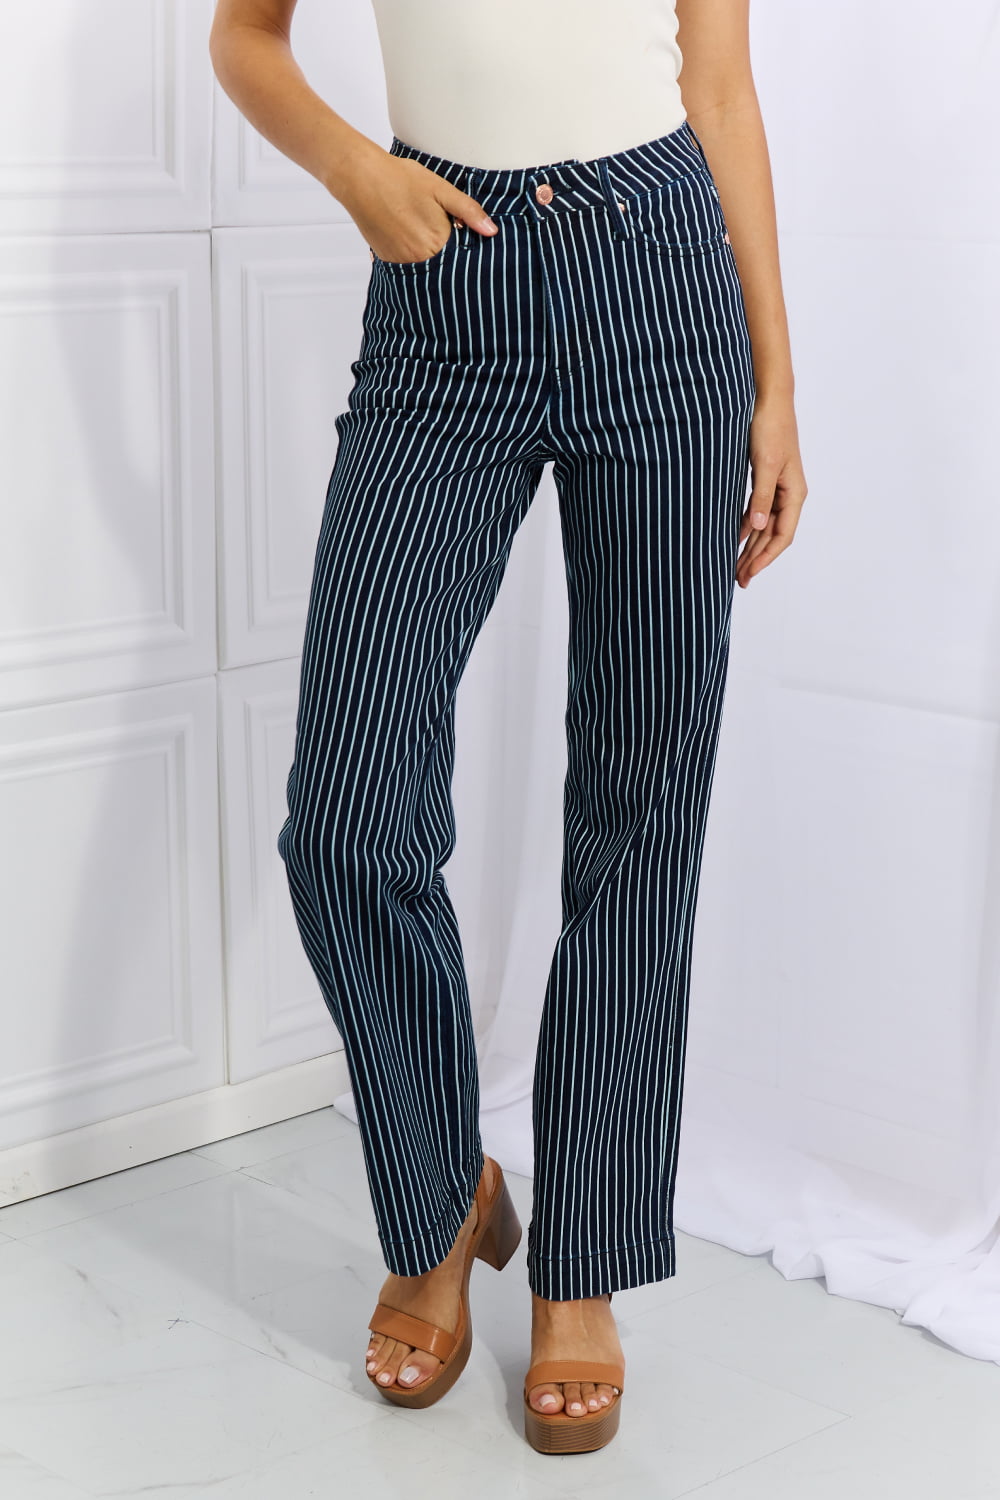 Slim High Waist Trousers - Dark brown/White striped - Ladies | H&M IN